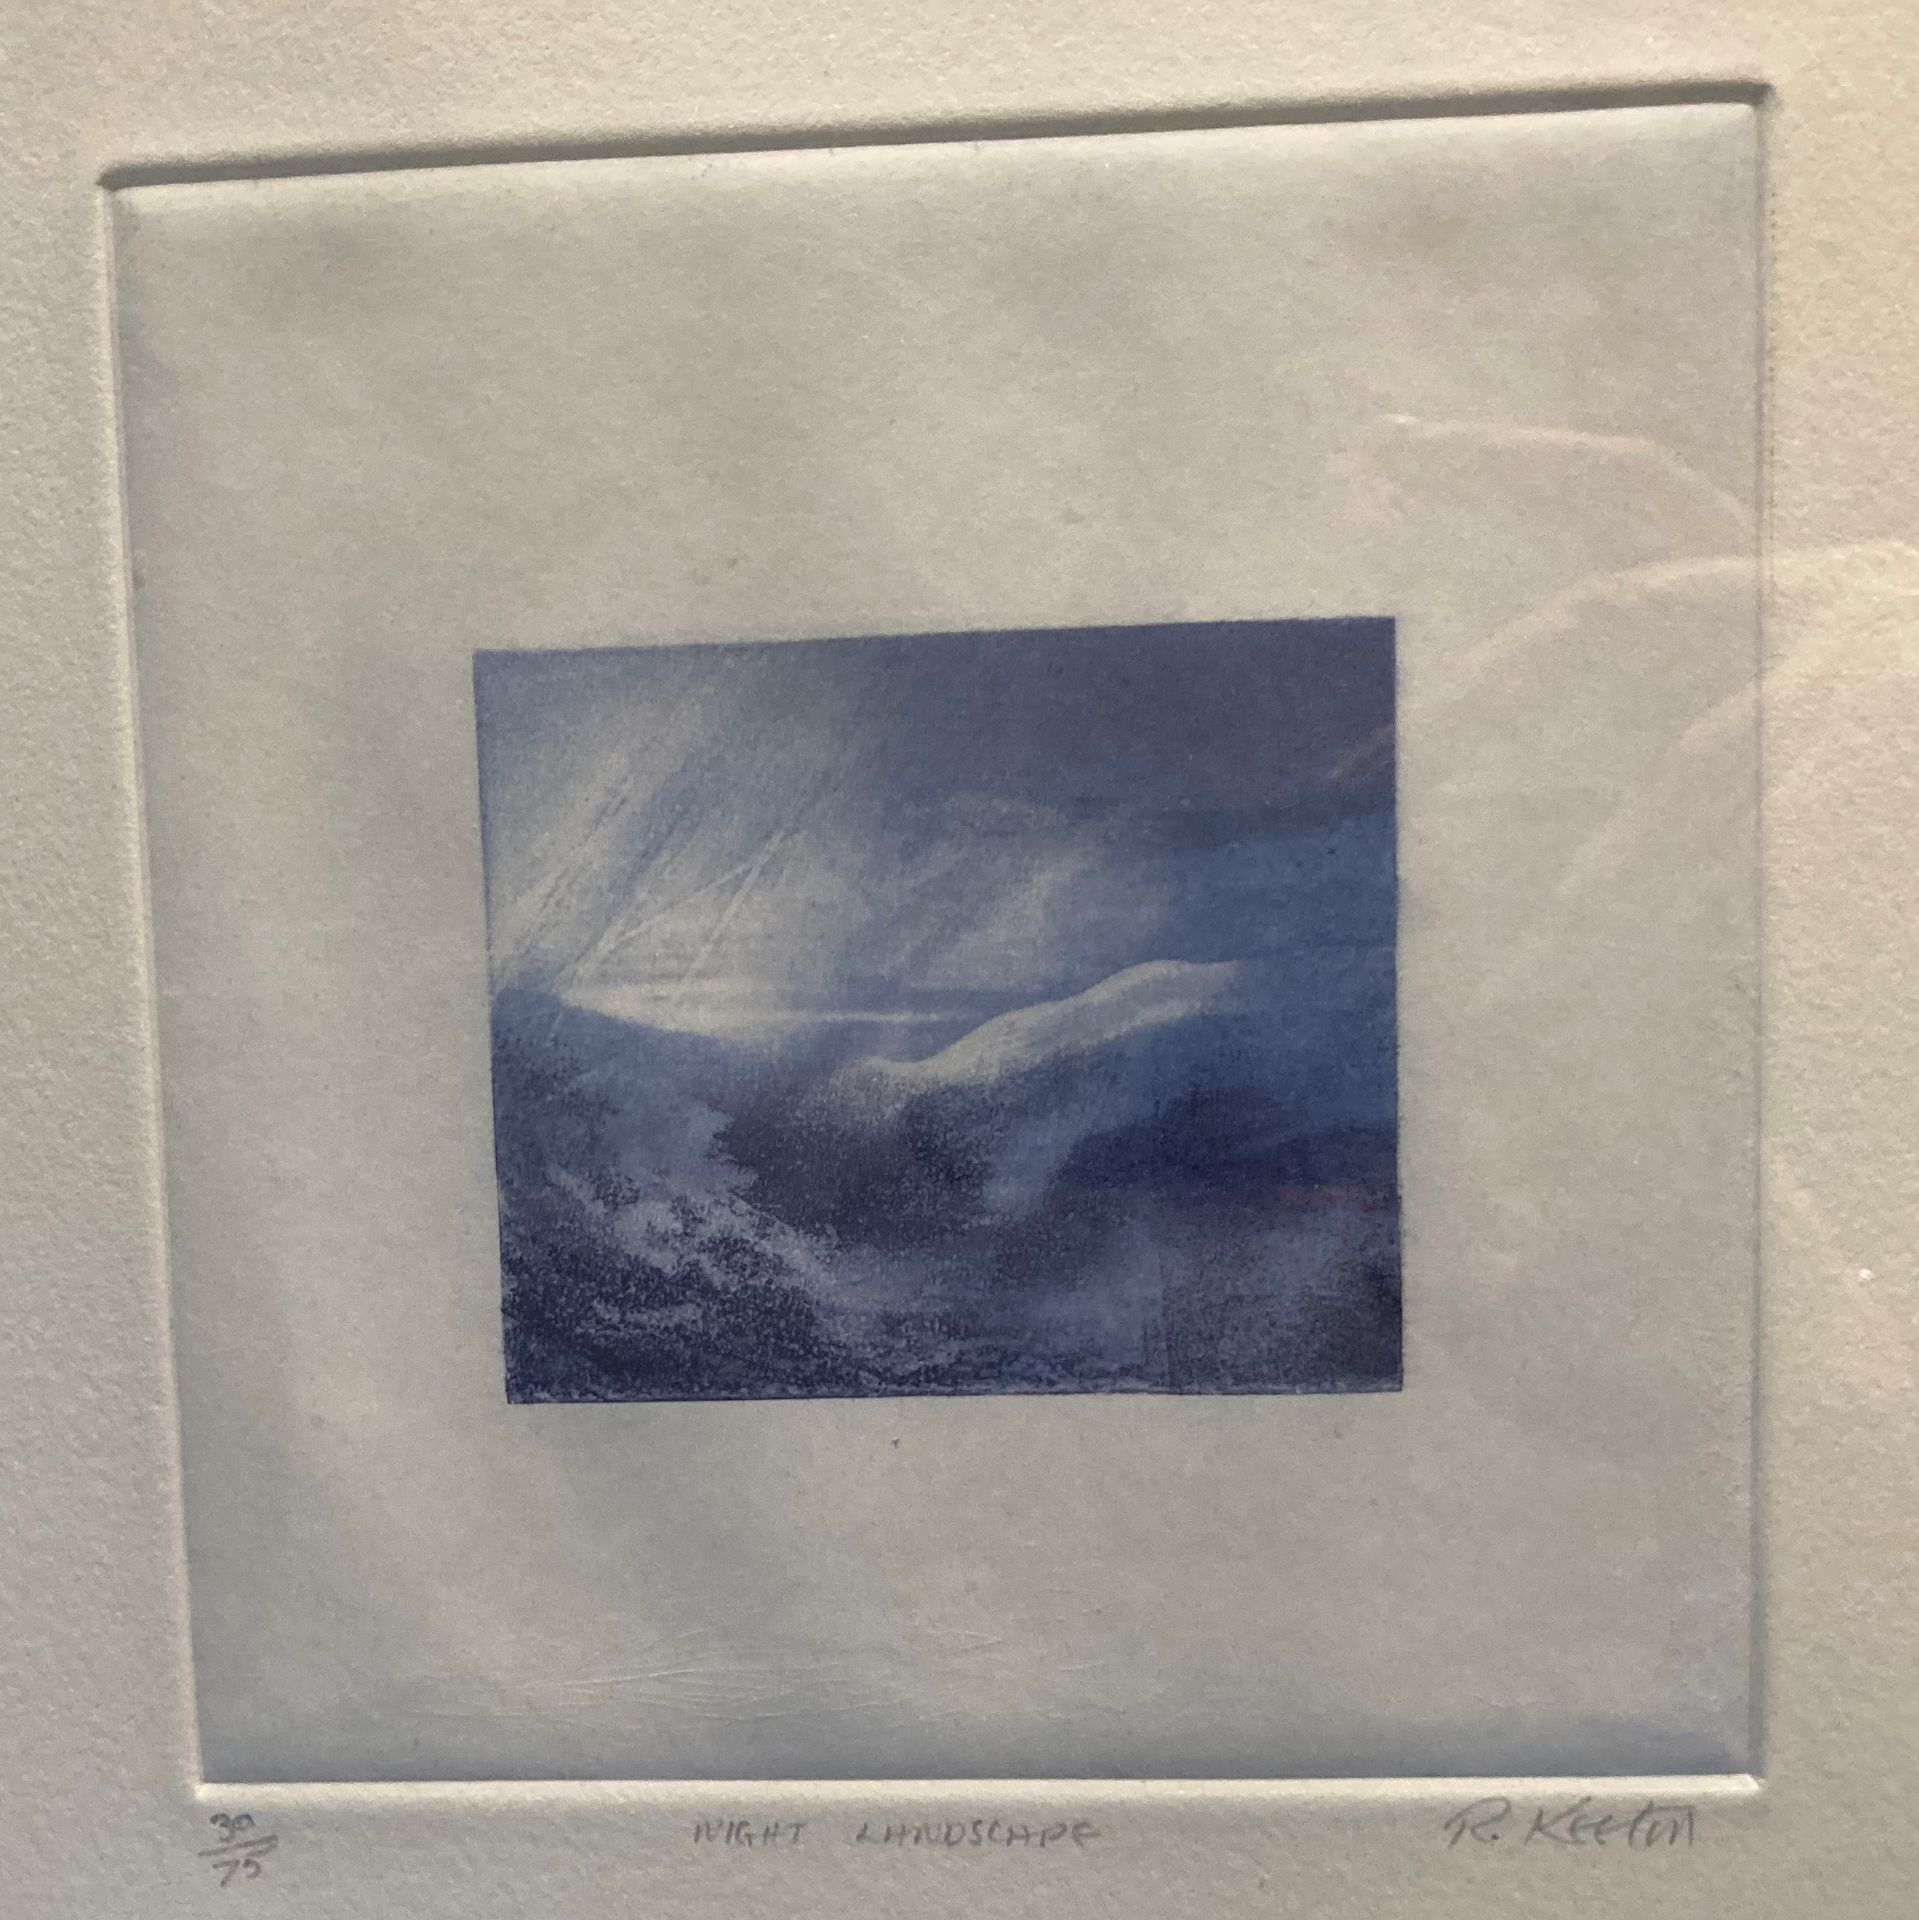 A framed, signed aquatint etching by Richard Keeton 'Night Landscape', - Image 3 of 5